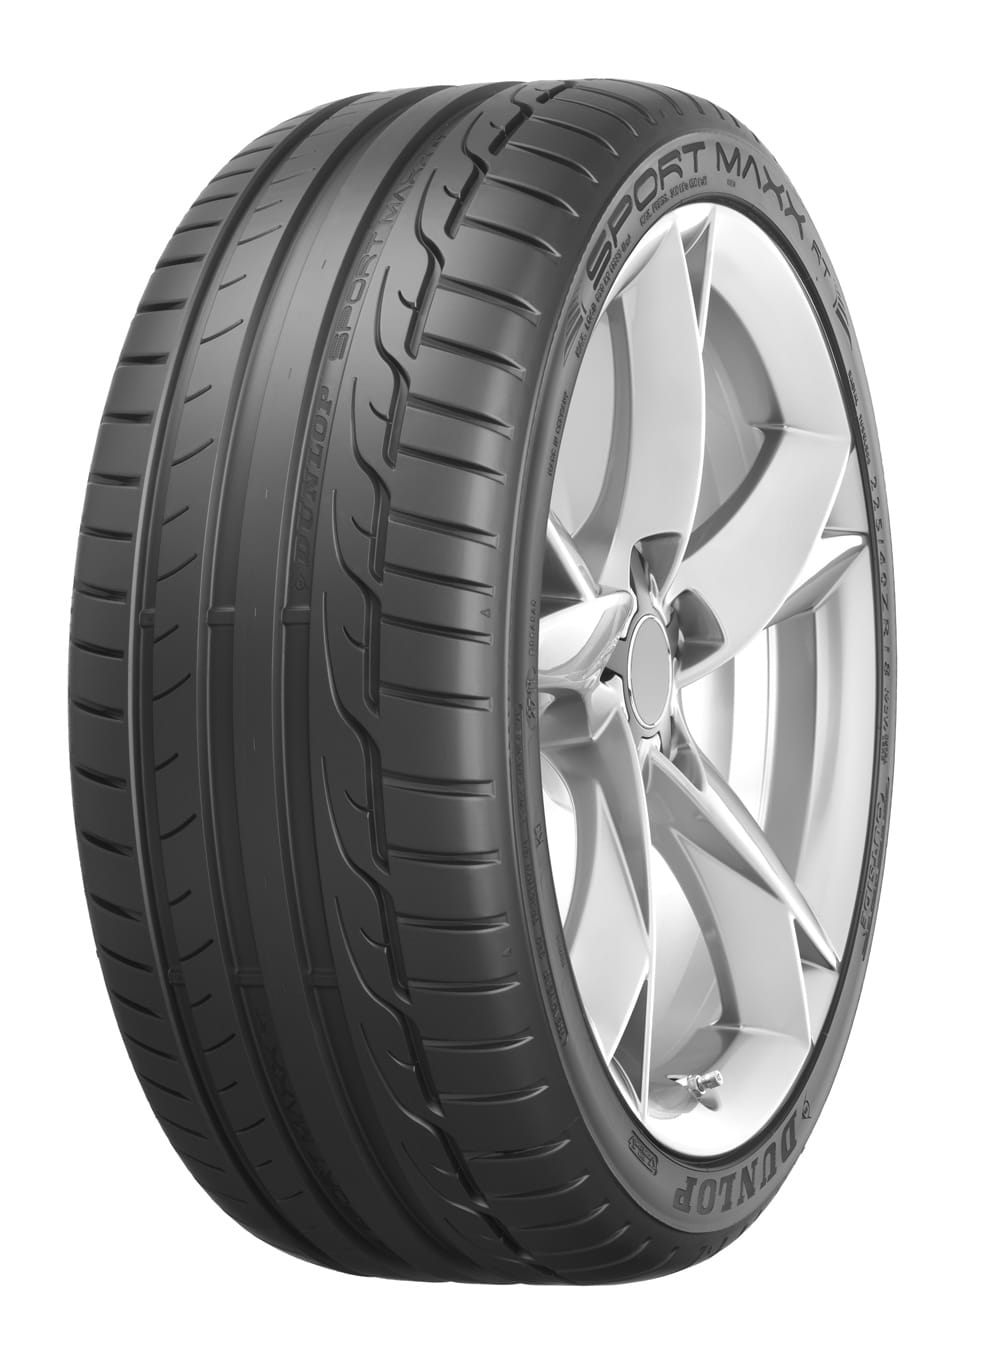 Gomme Nuove Dunlop 225/55 R16 95Y SP.MAXX RT MFS pneumatici nuovi Estivo